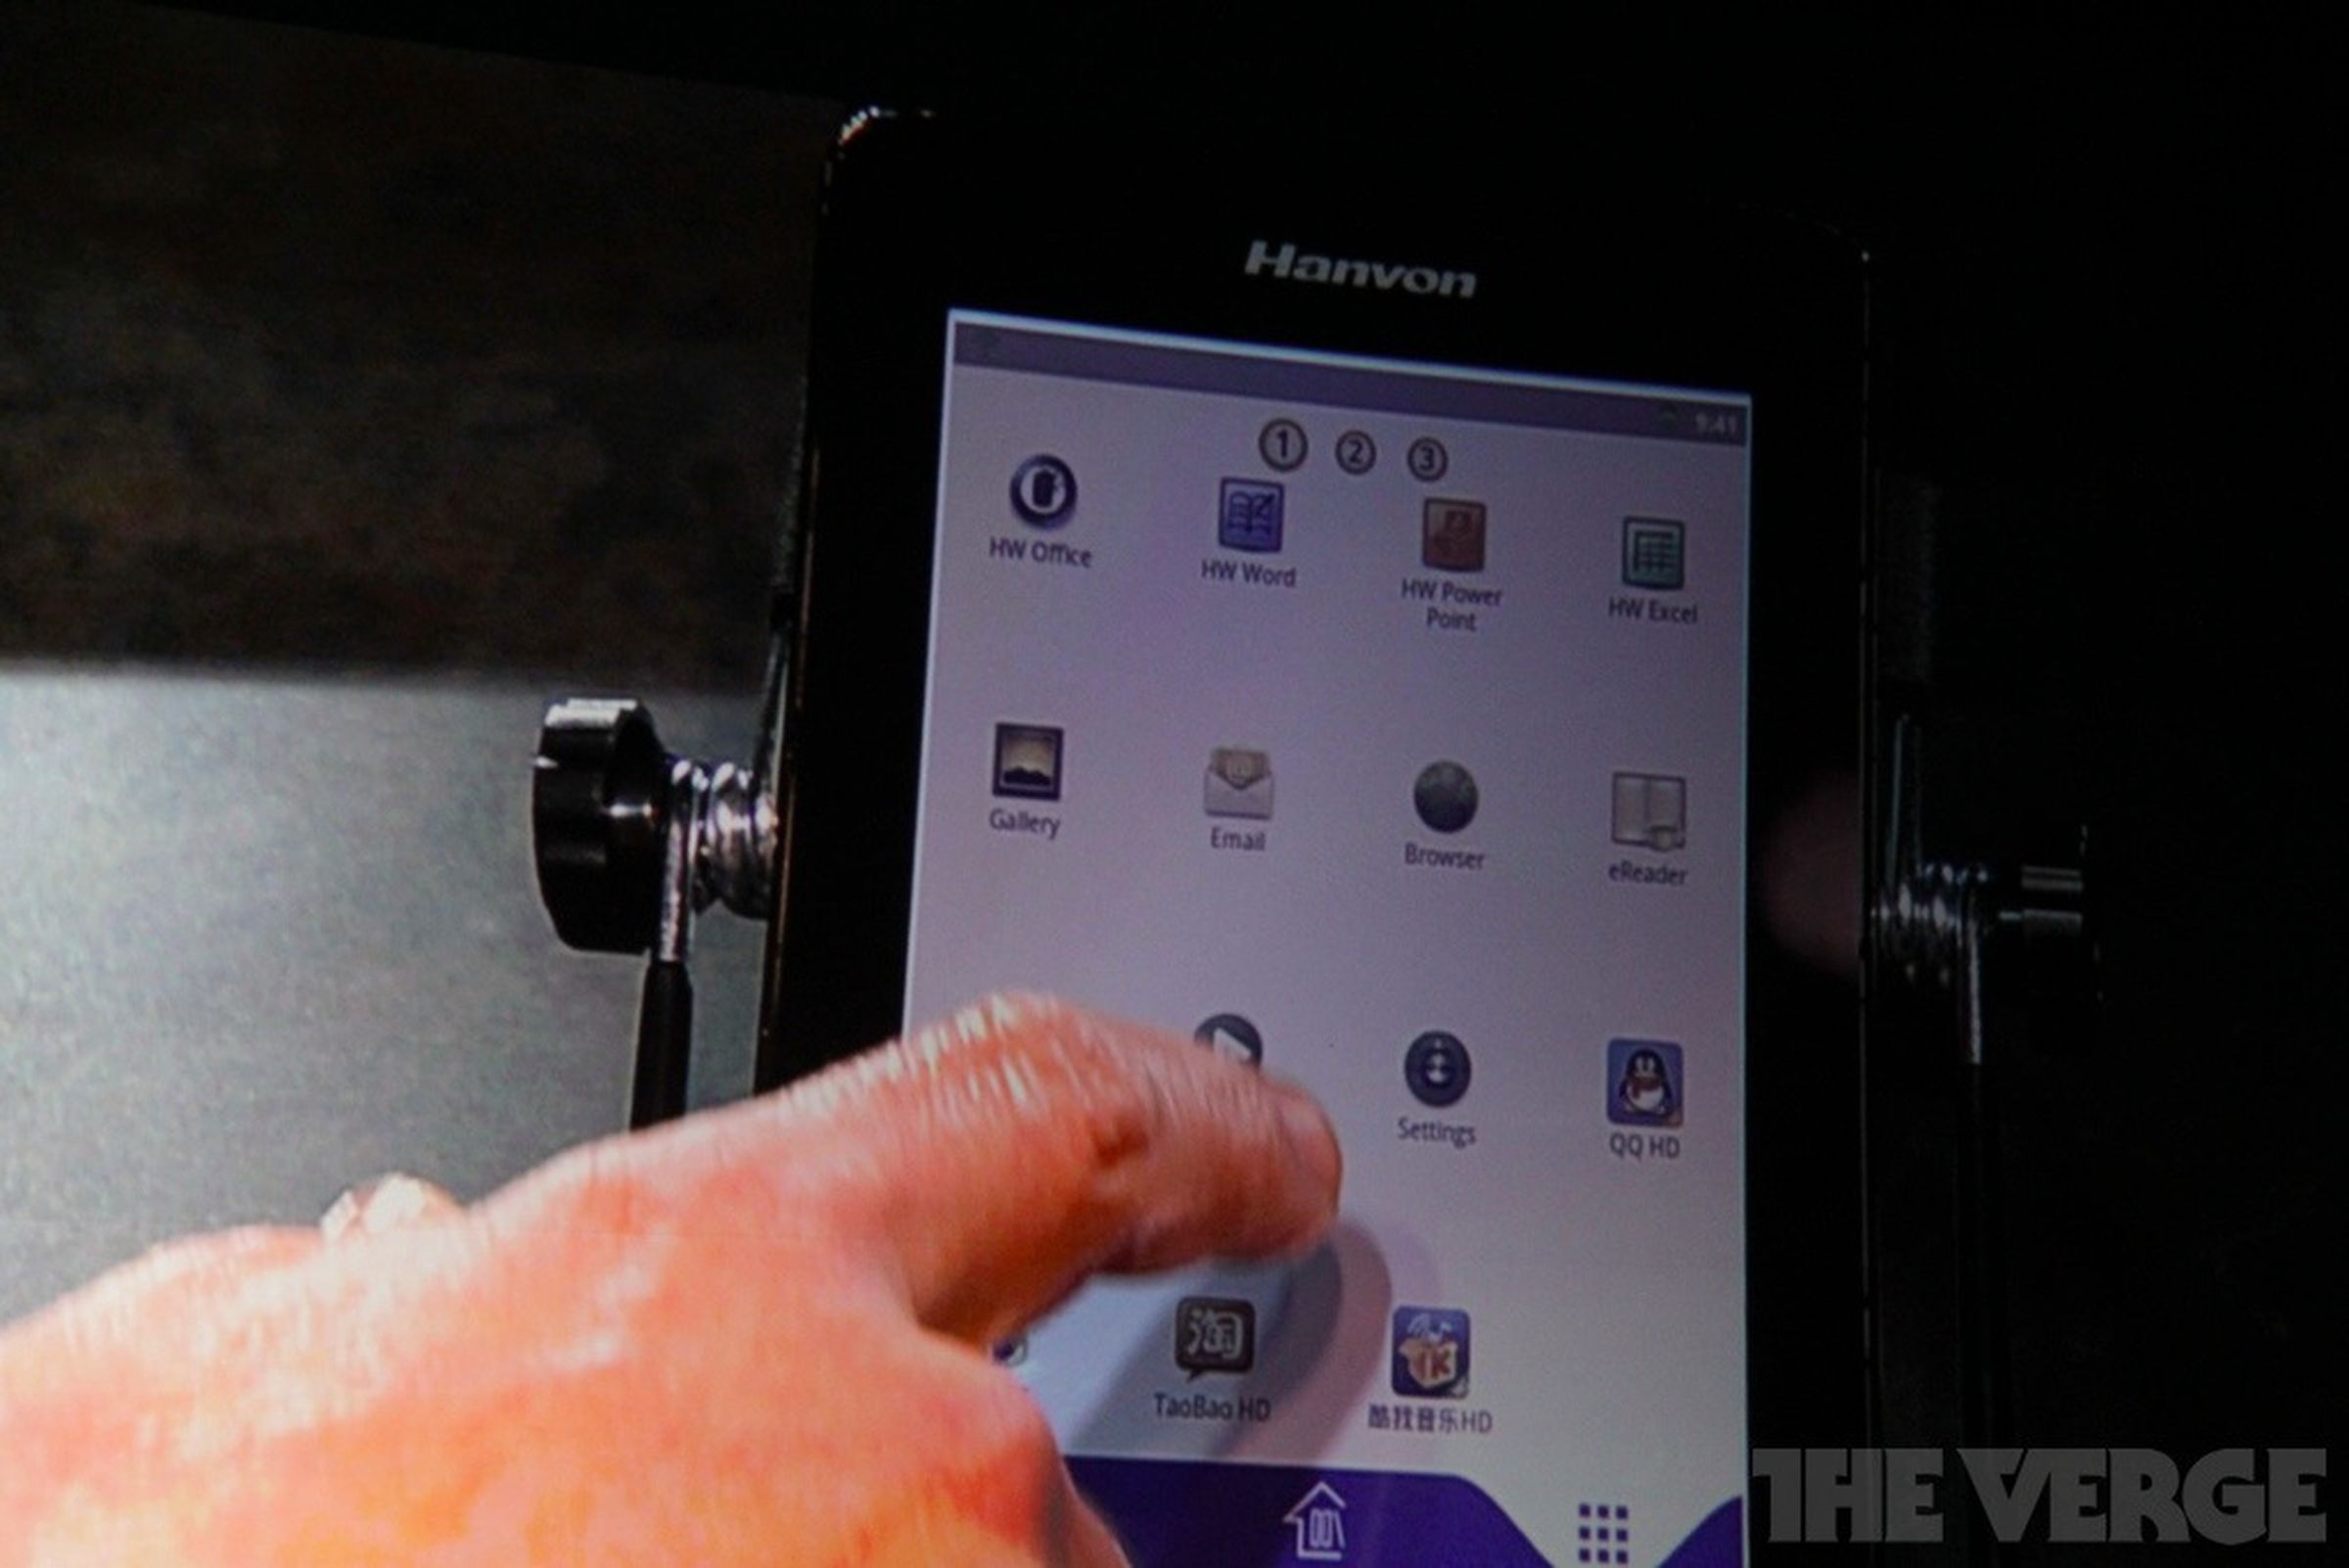 Hanvon's Mirasol color e-reader at Qualcomm's CES 2012